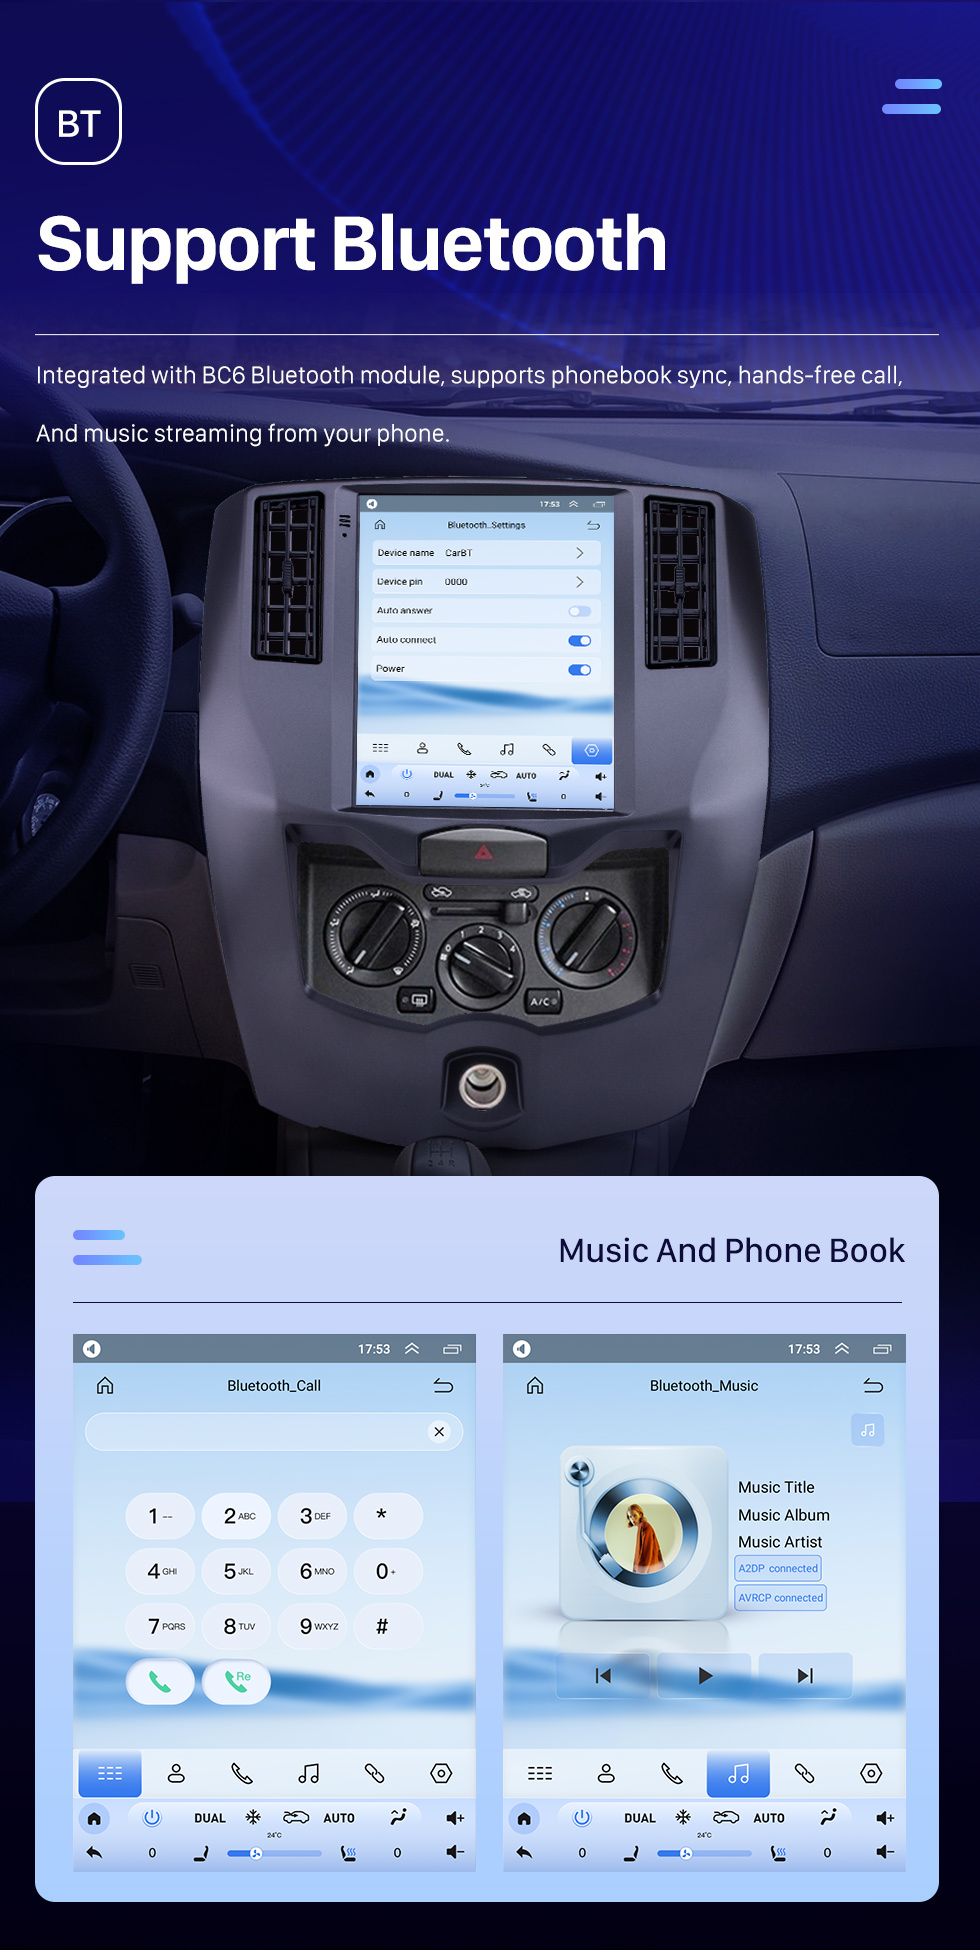 Seicane 9,7-Zoll-HD-Touchscreen für 2008-2015 Nissan Liwei Stereo-Autoradio Bluetooth Carplay-Stereoanlage Unterstützung AHD-Kamera